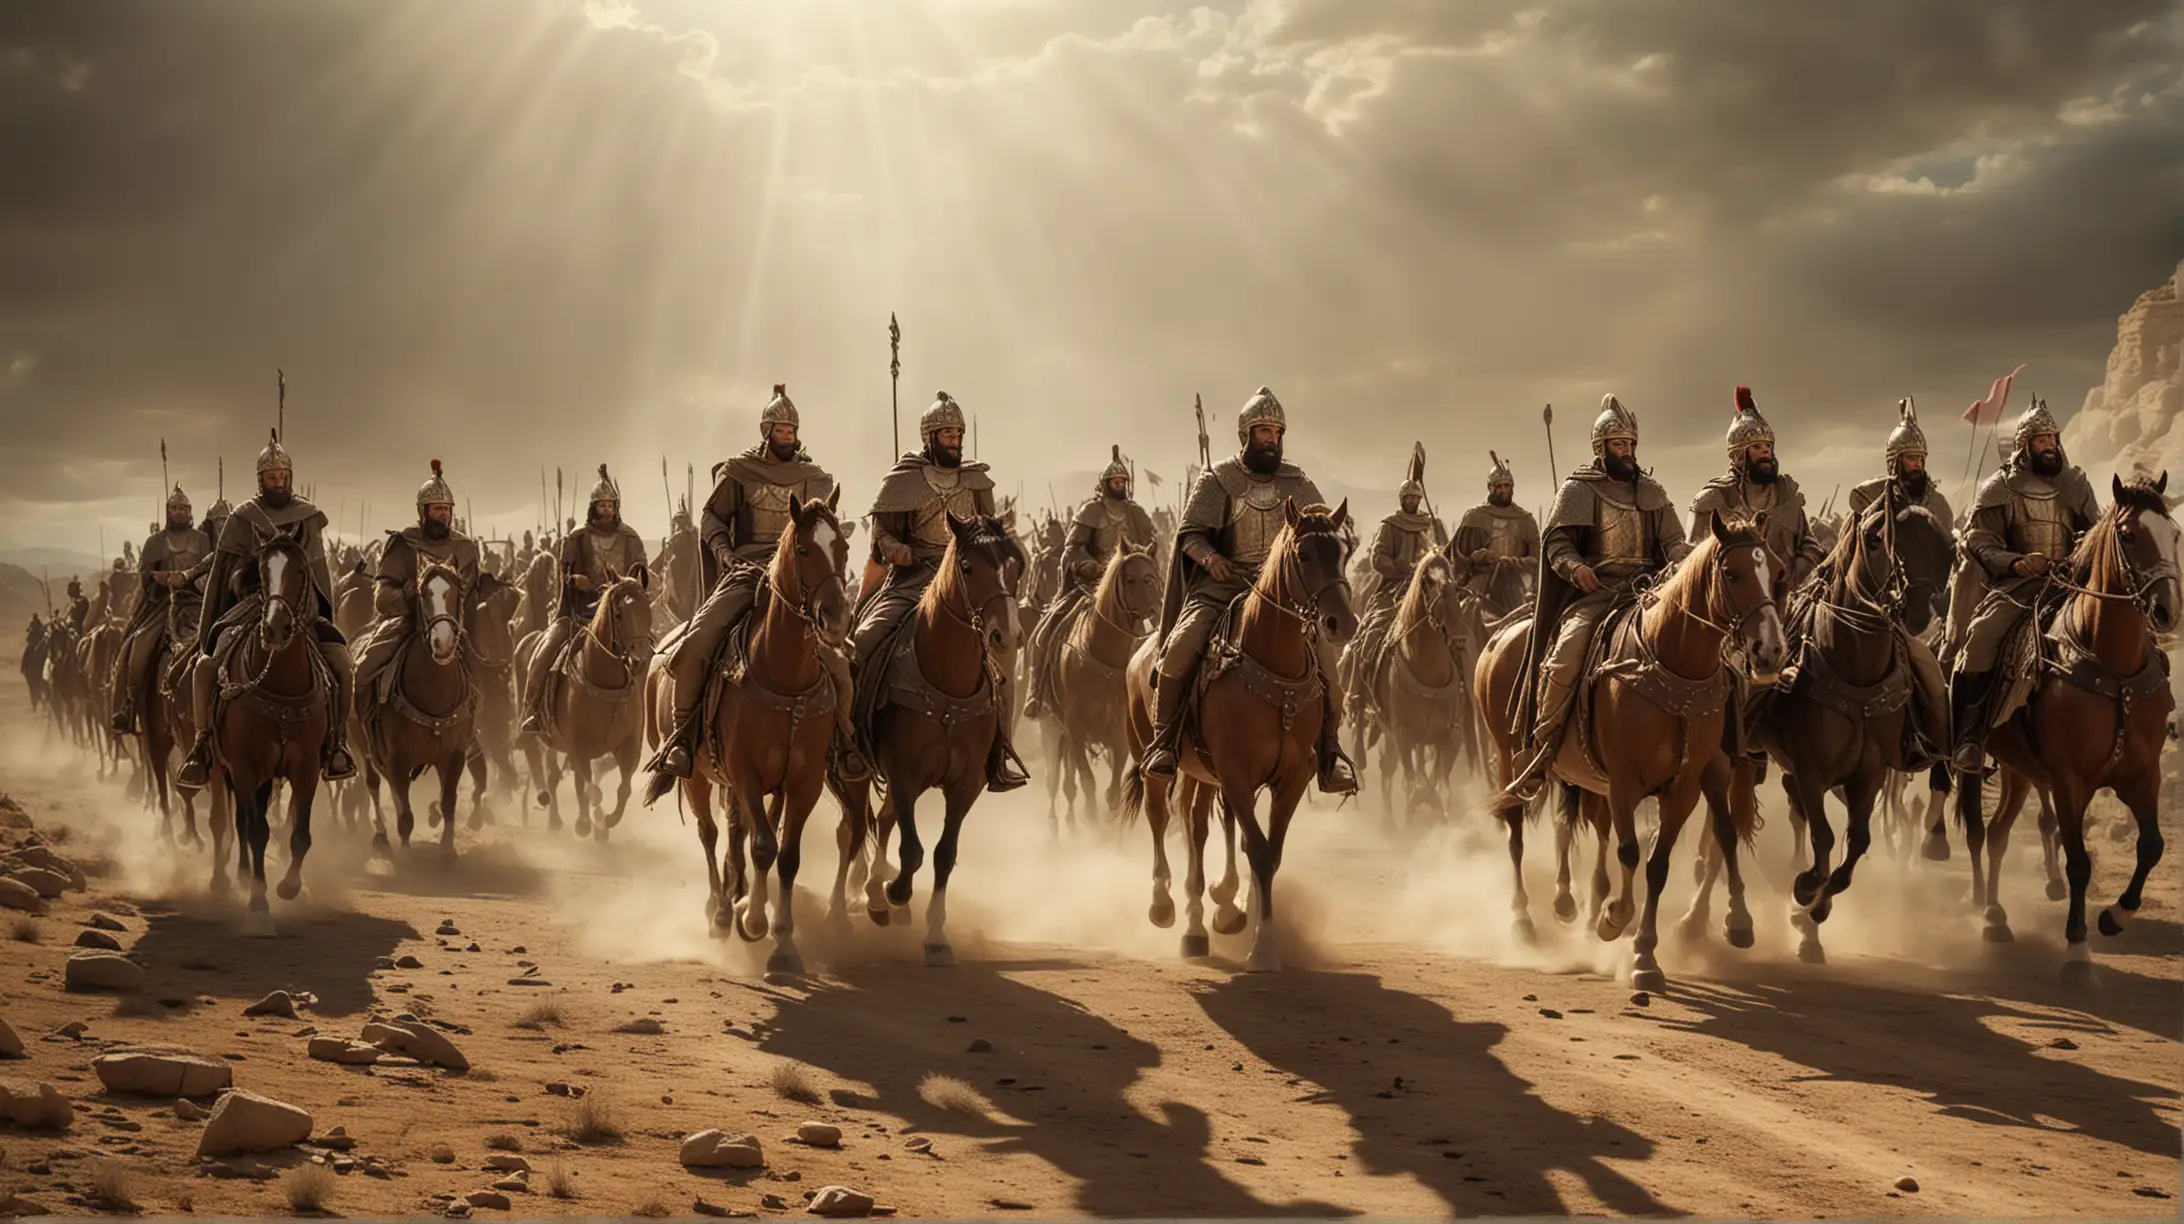 King and Troop Arriving in Chariots Biblical Era Scene with Elijah